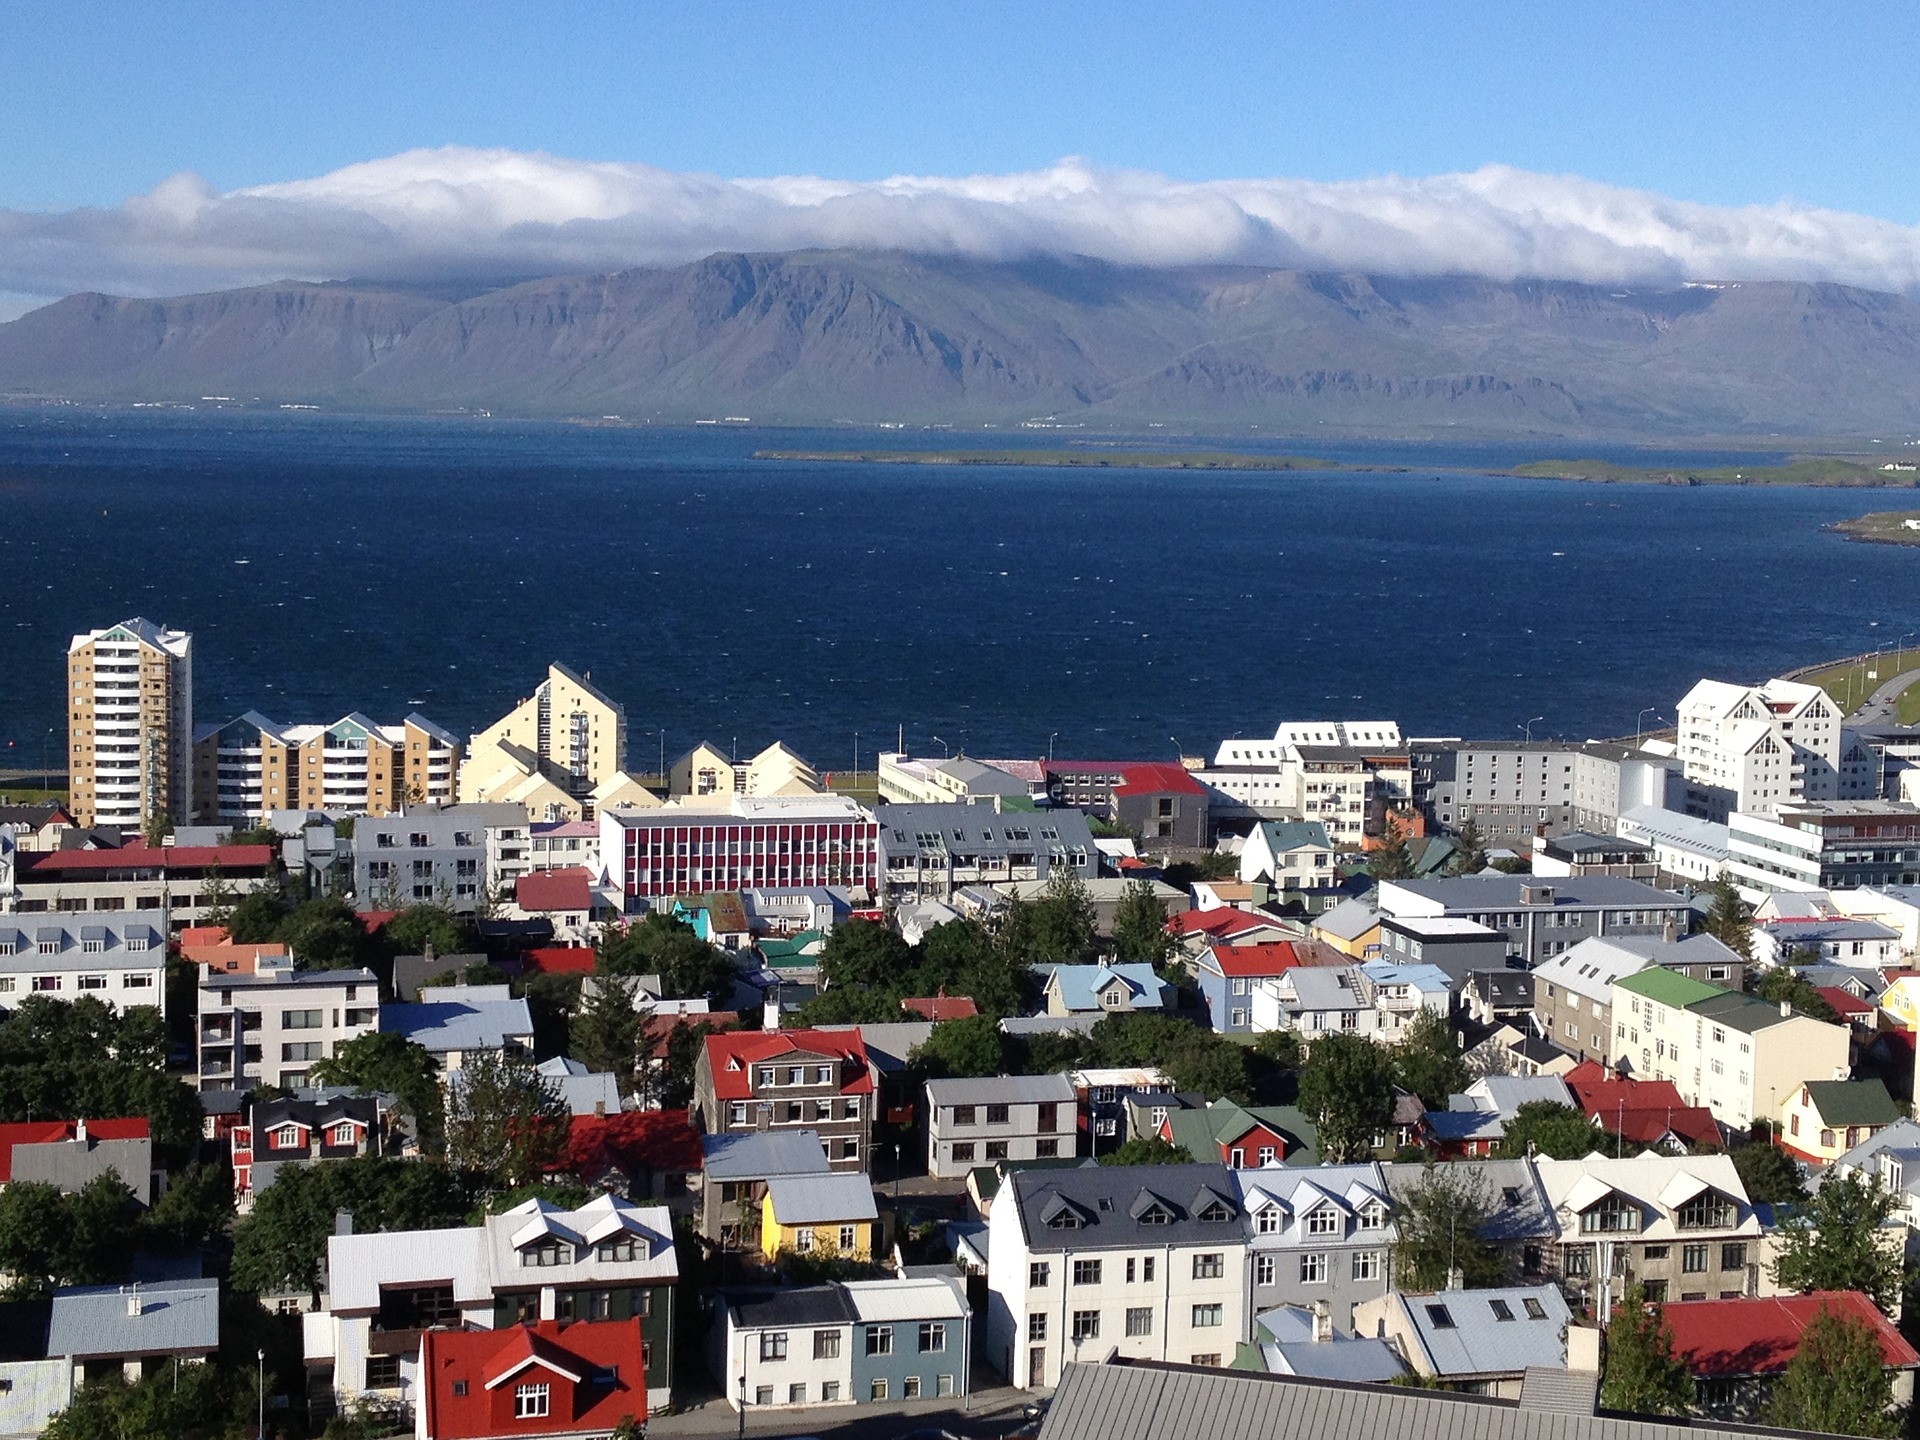 Places to visit in Reykjavik